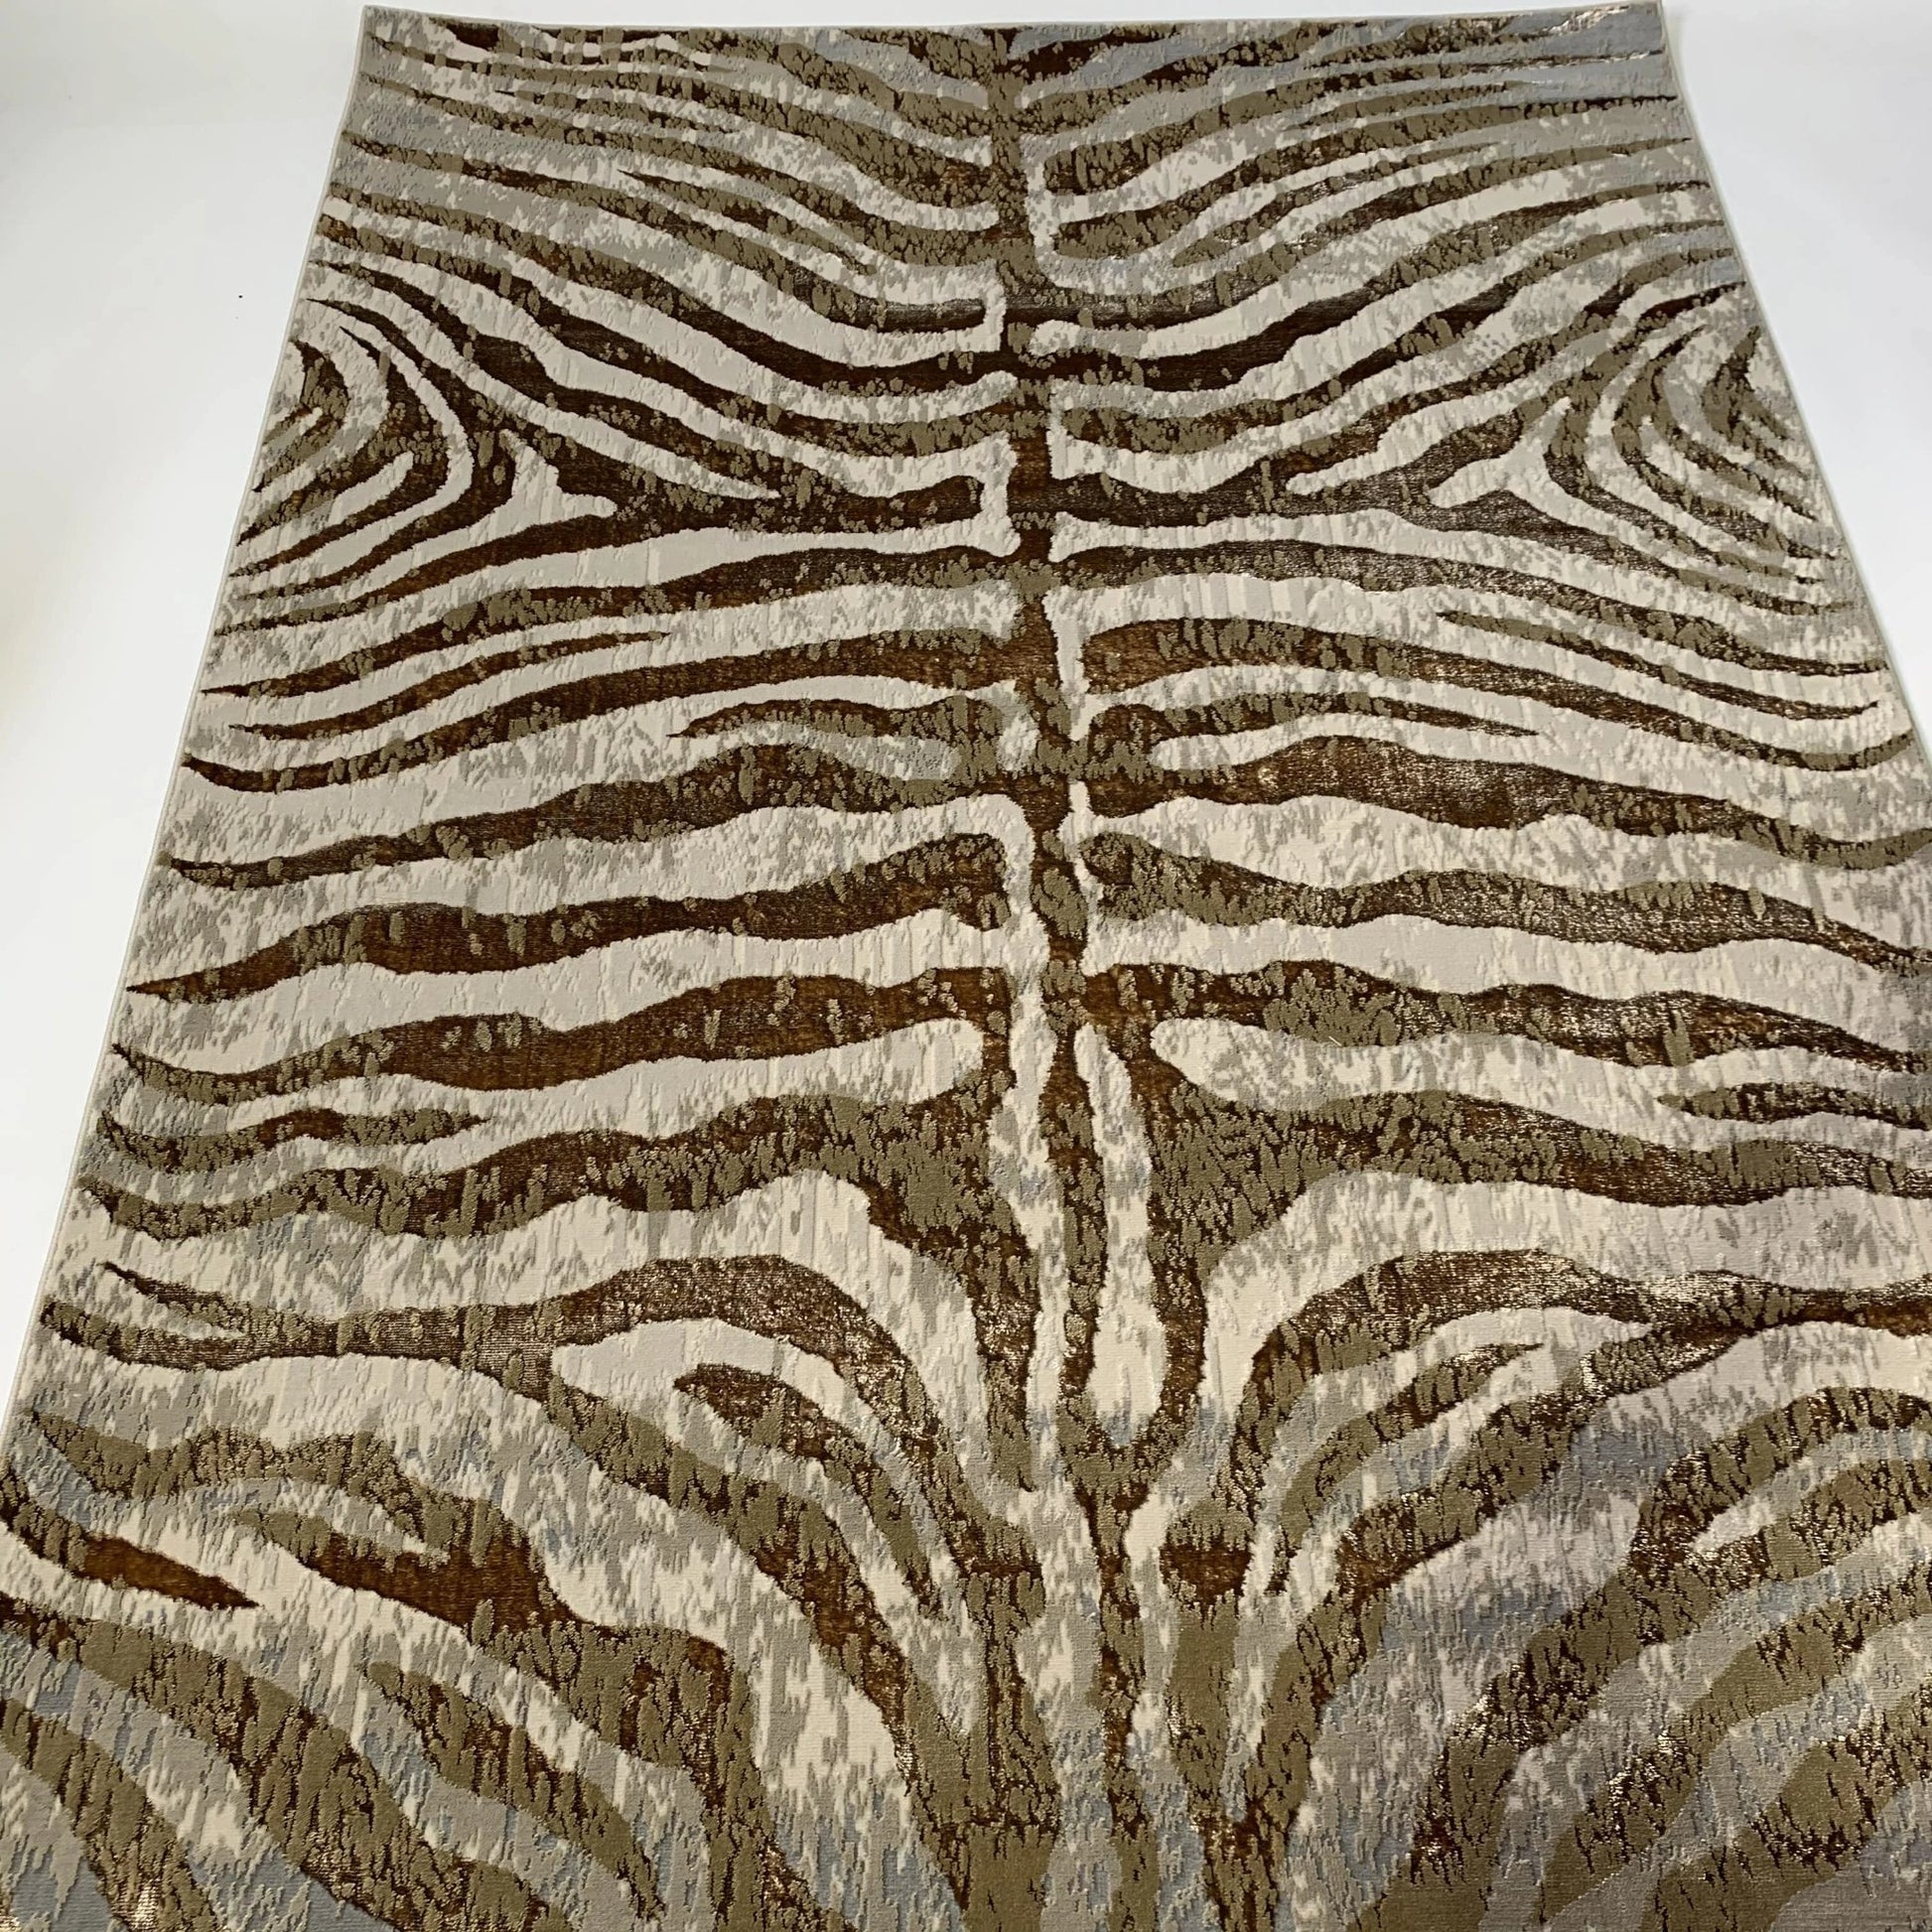 Shimmery Changing Zebra Animal Print Soft Cozy Area Rug/Carpet